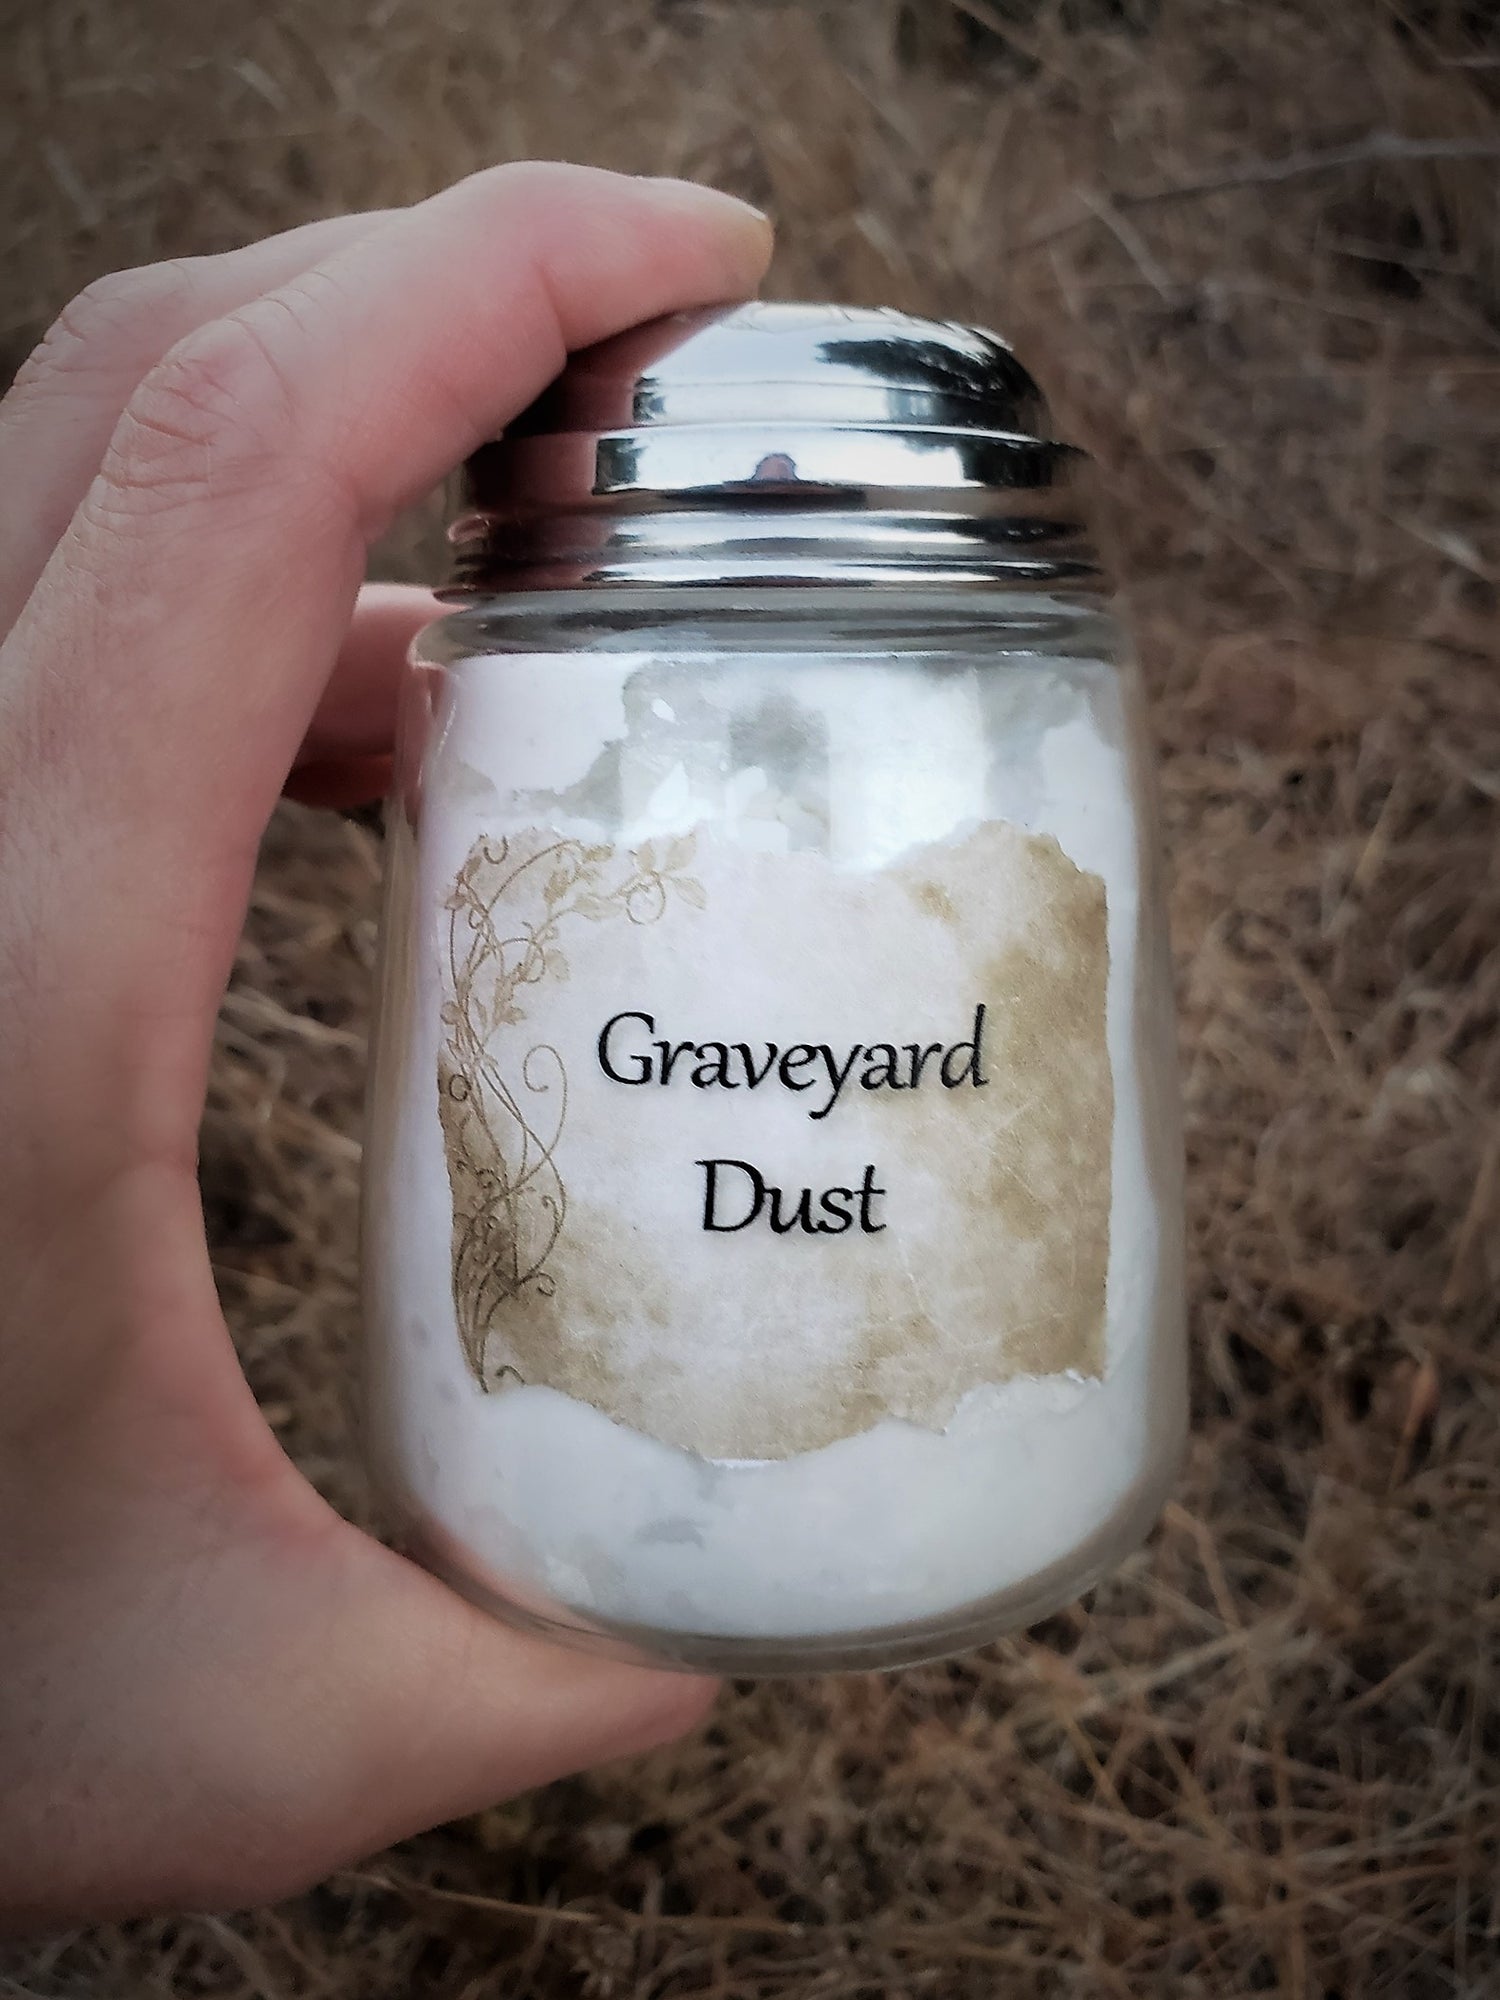 "Graveyard Dust" Scented Talc Free Body Powder in a Vintage Shaker Jar